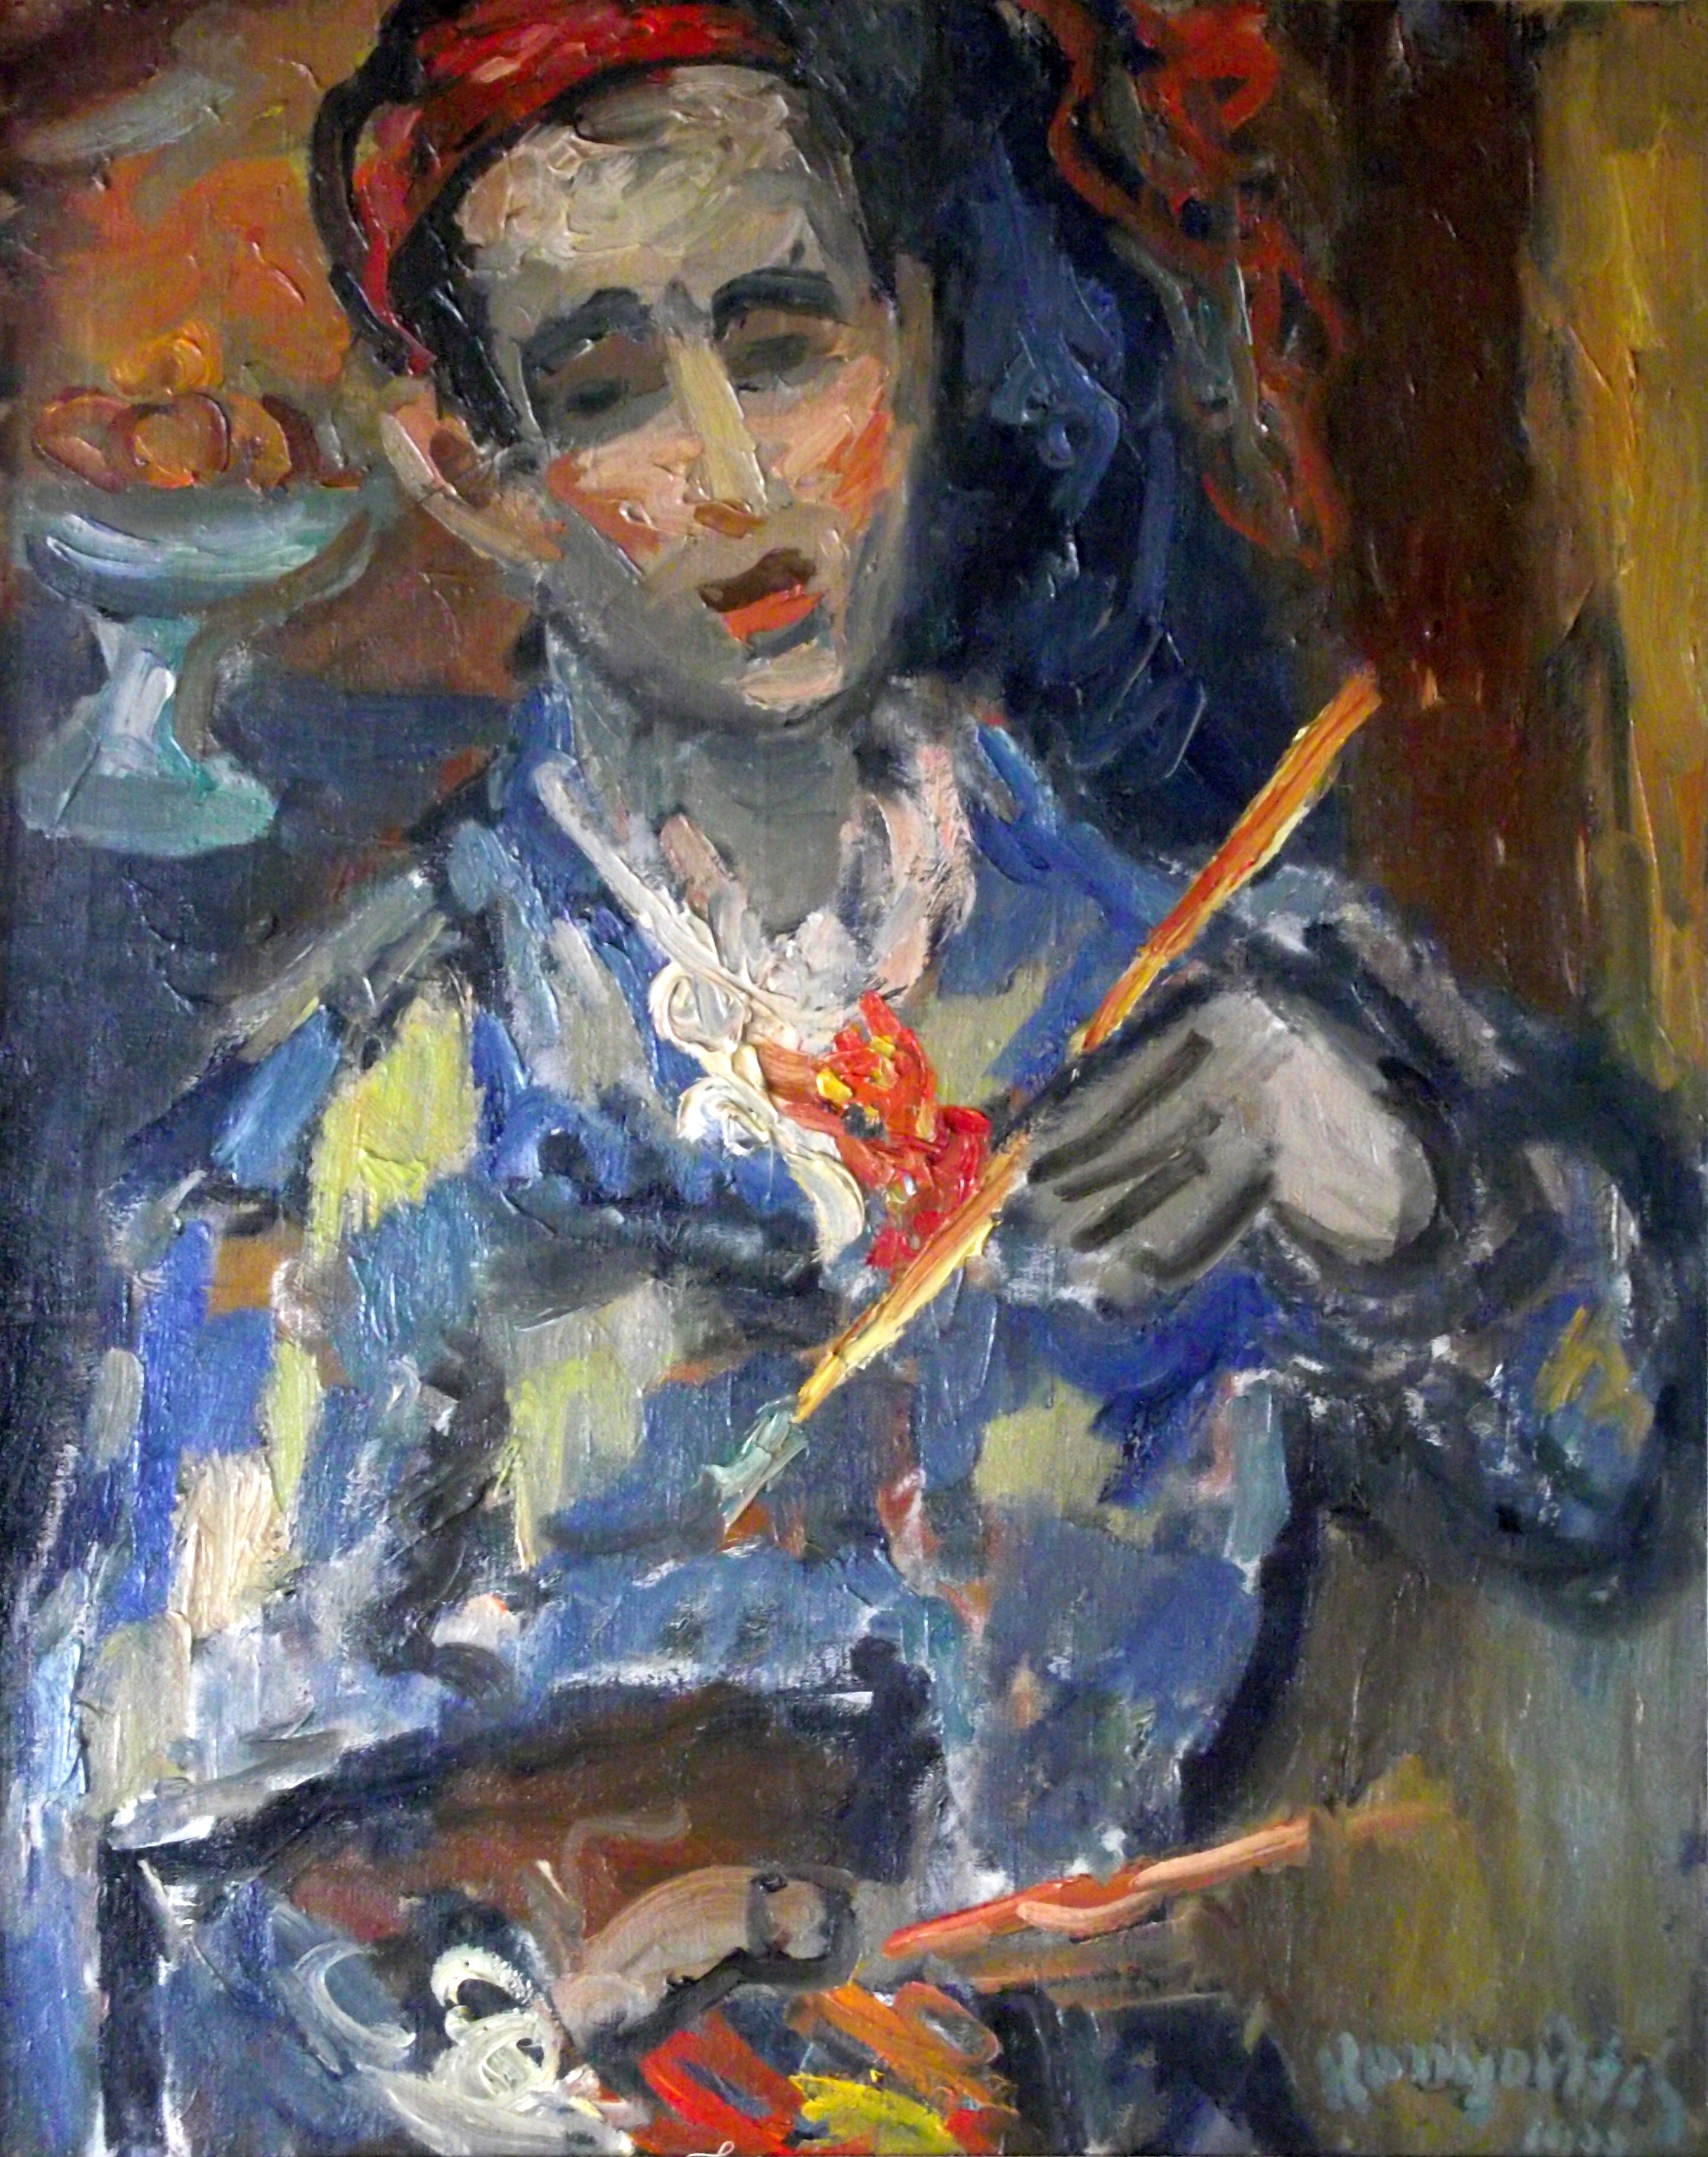 Milan Konjović, a passionate colorist from Sombor